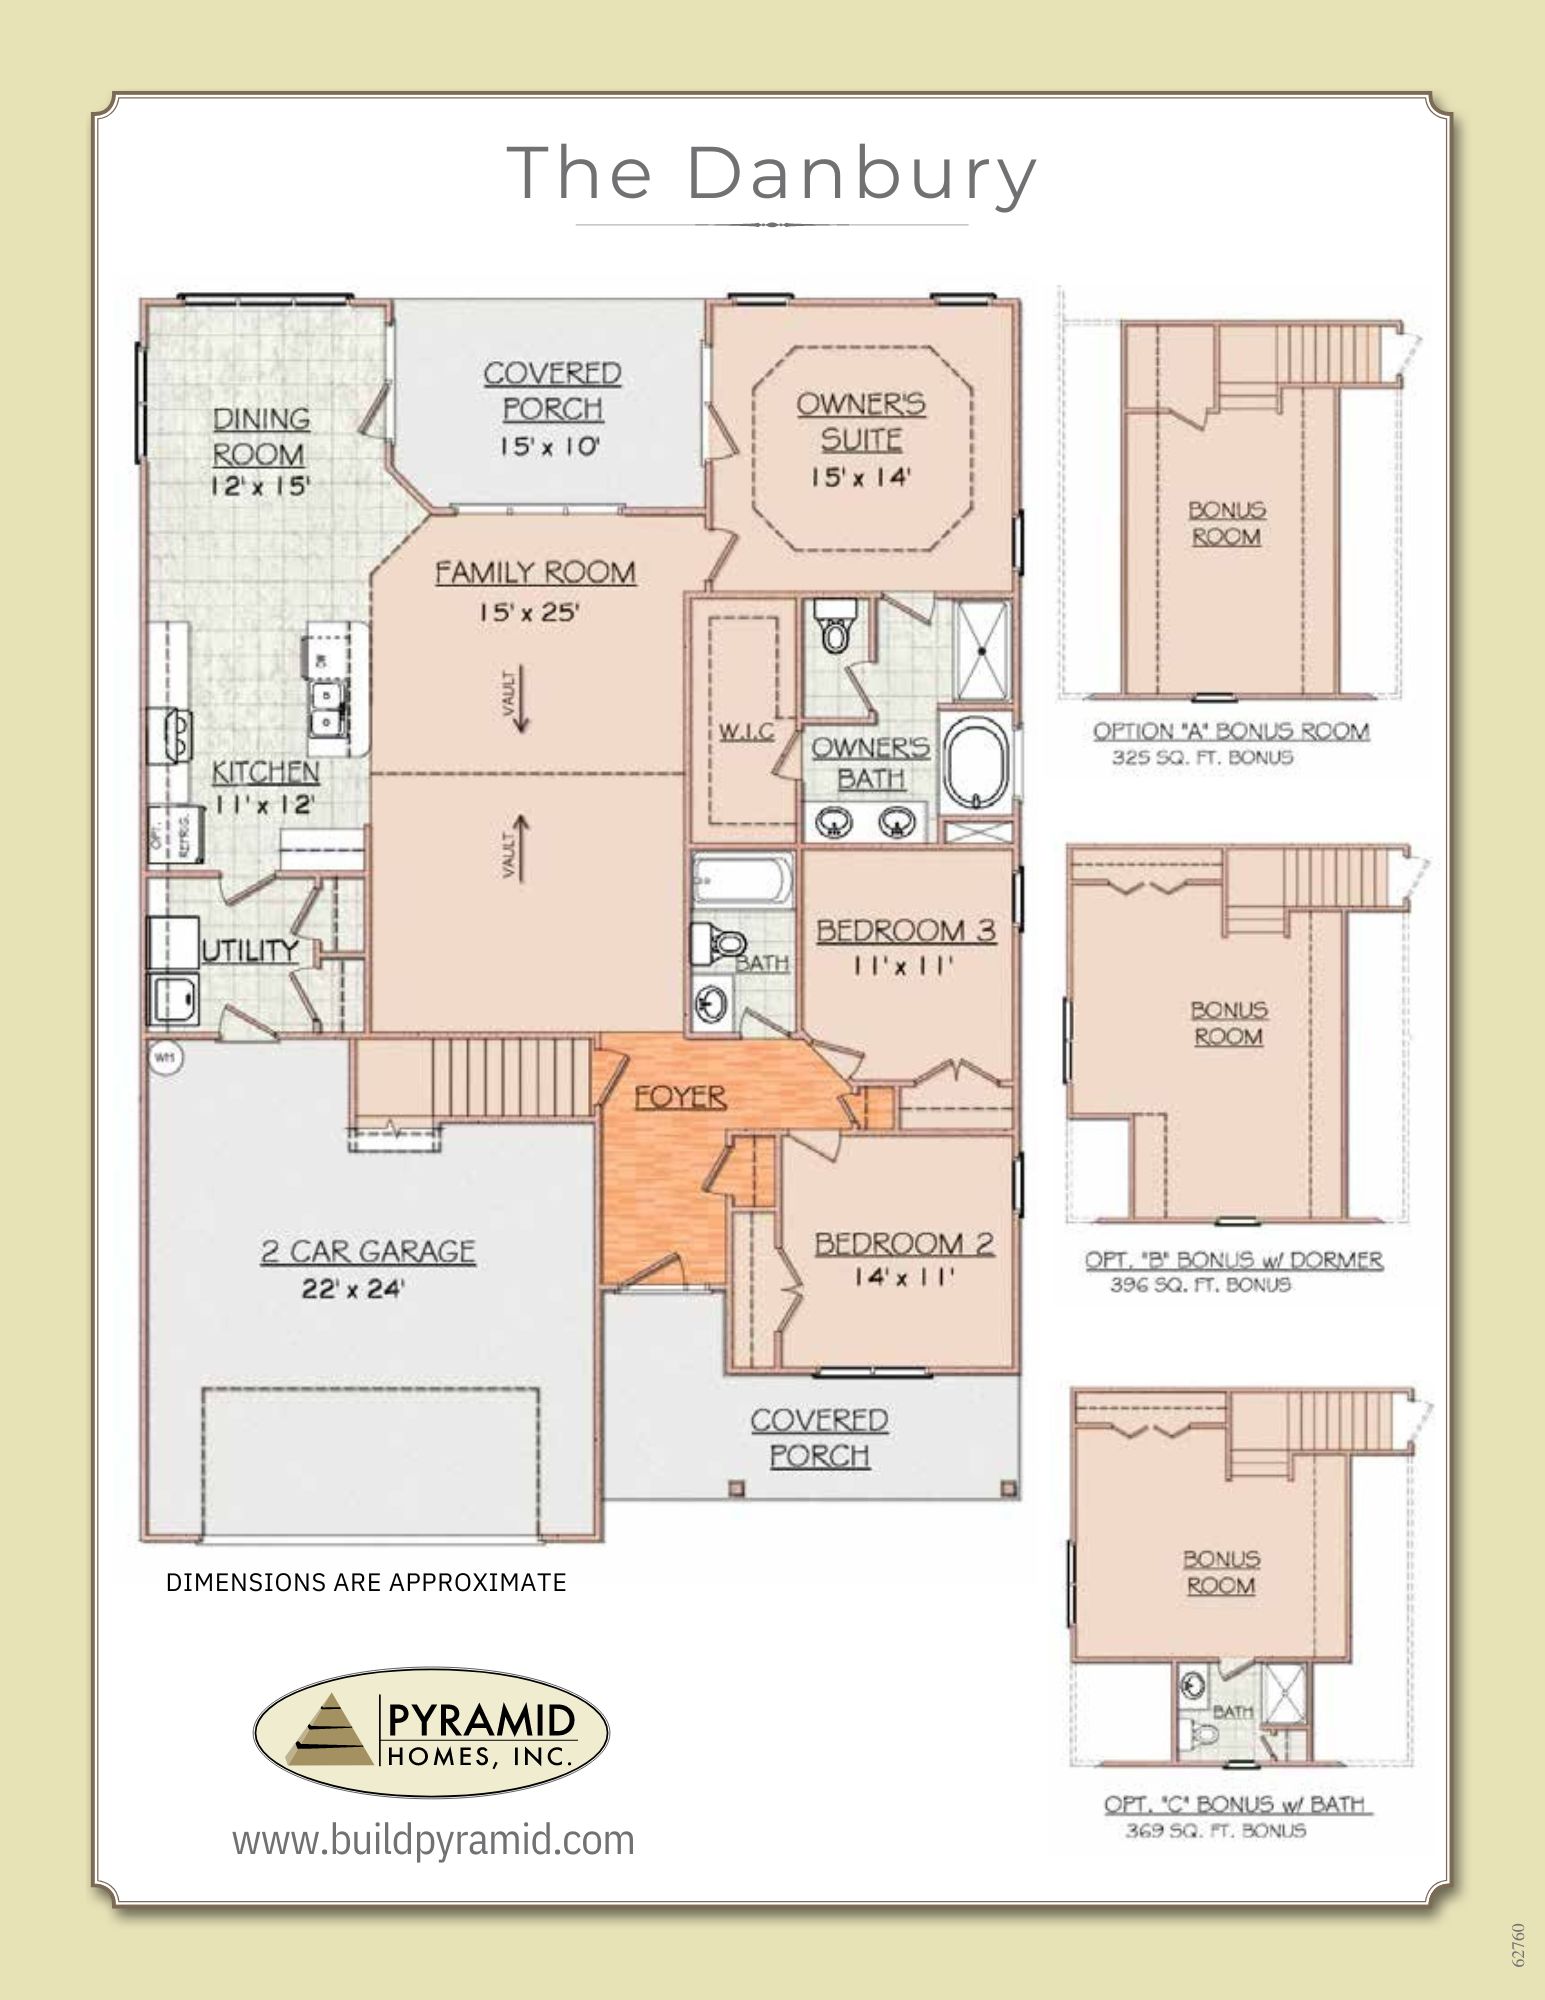 The Danbury floor plan image